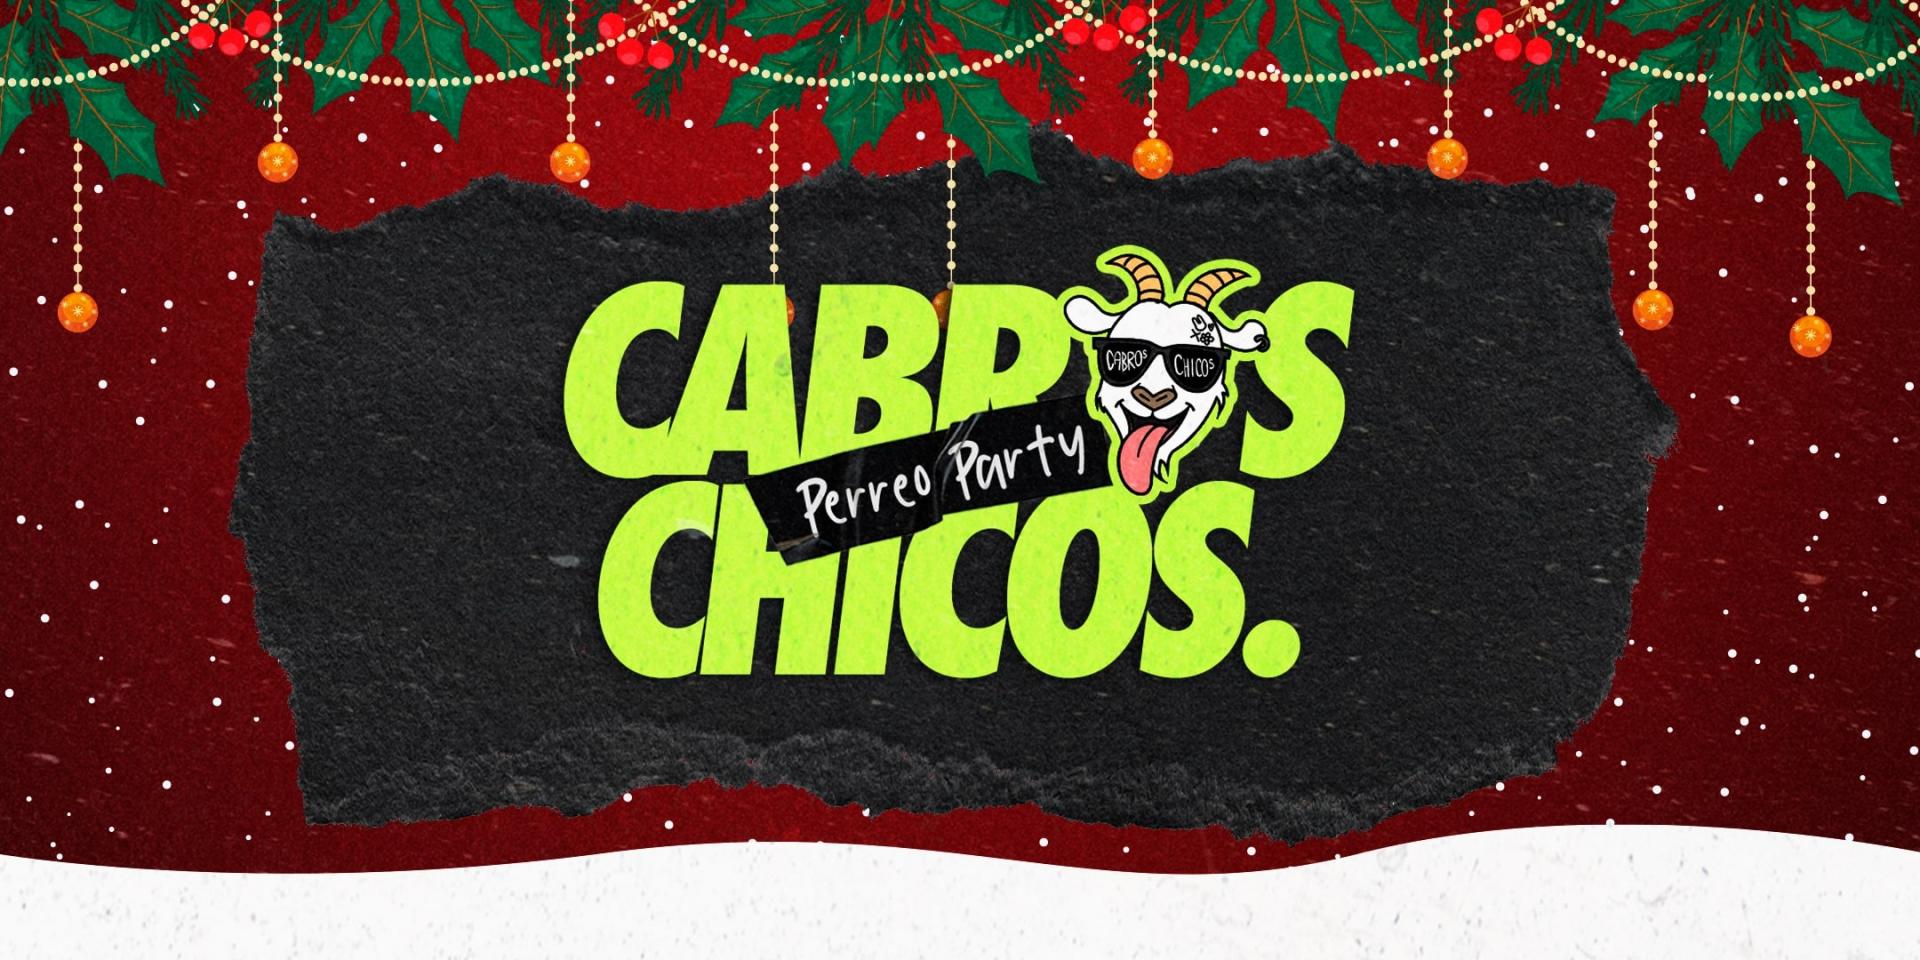 Cabros Chicos - Christmas Ball/Party